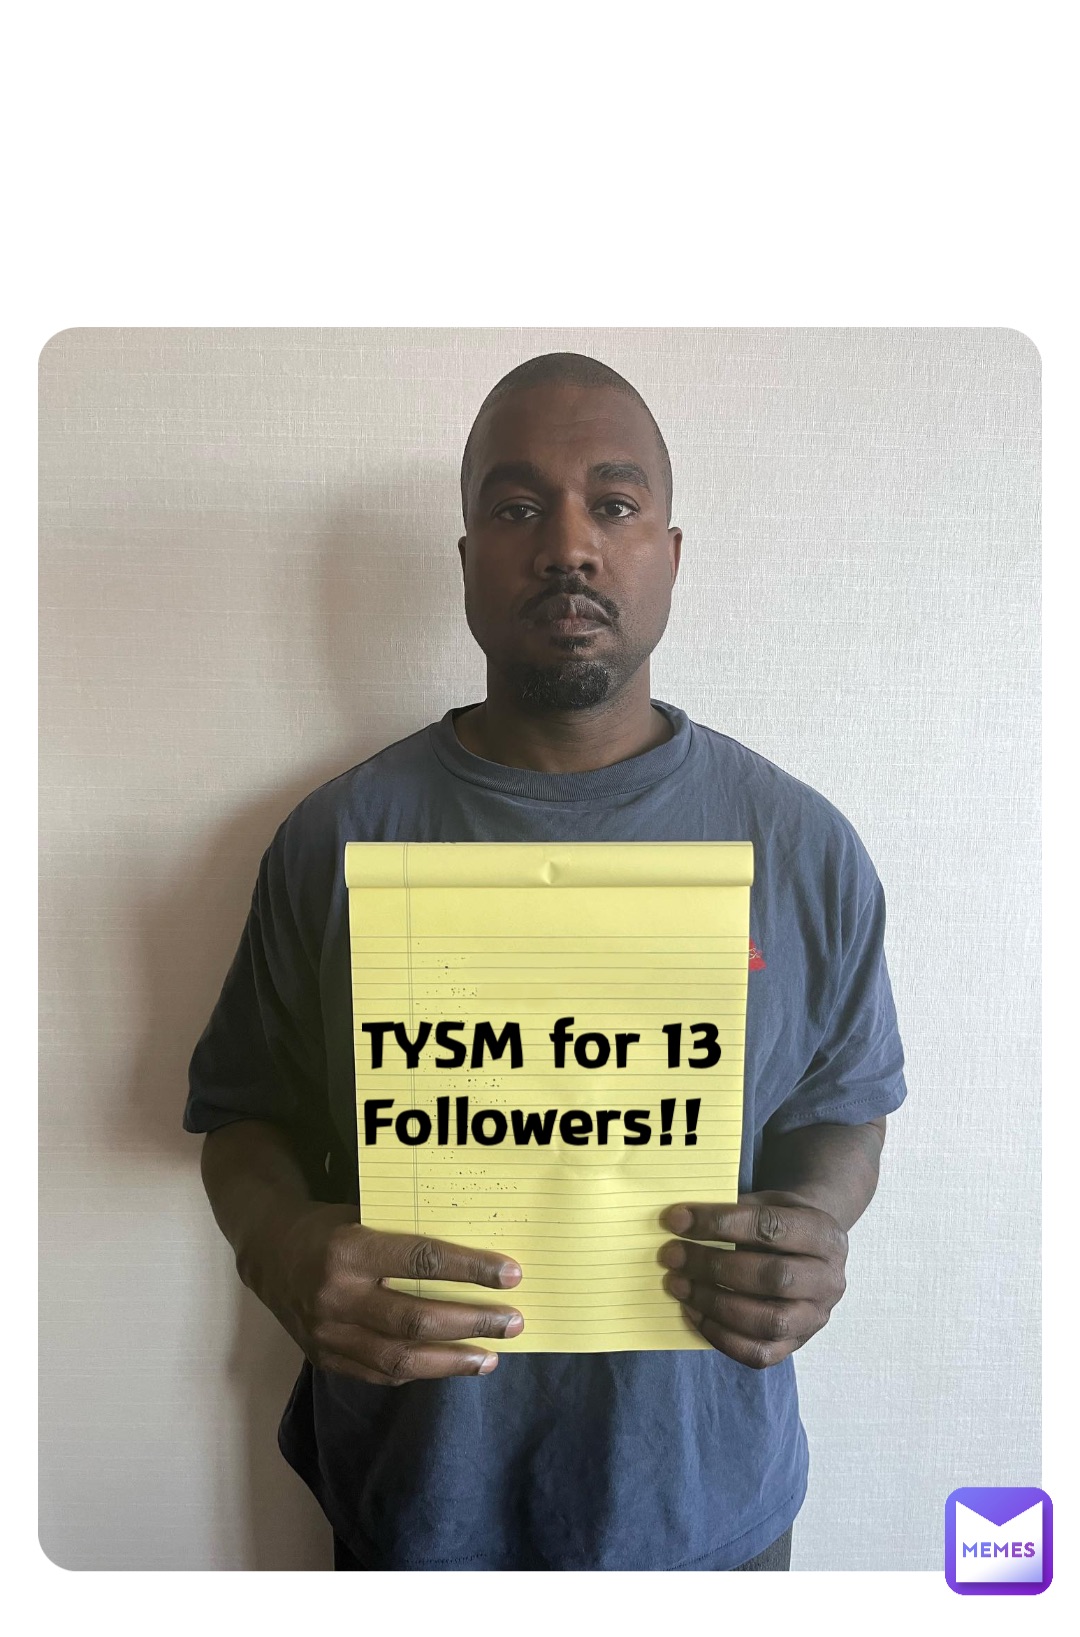 TYSM for 13
Followers!!